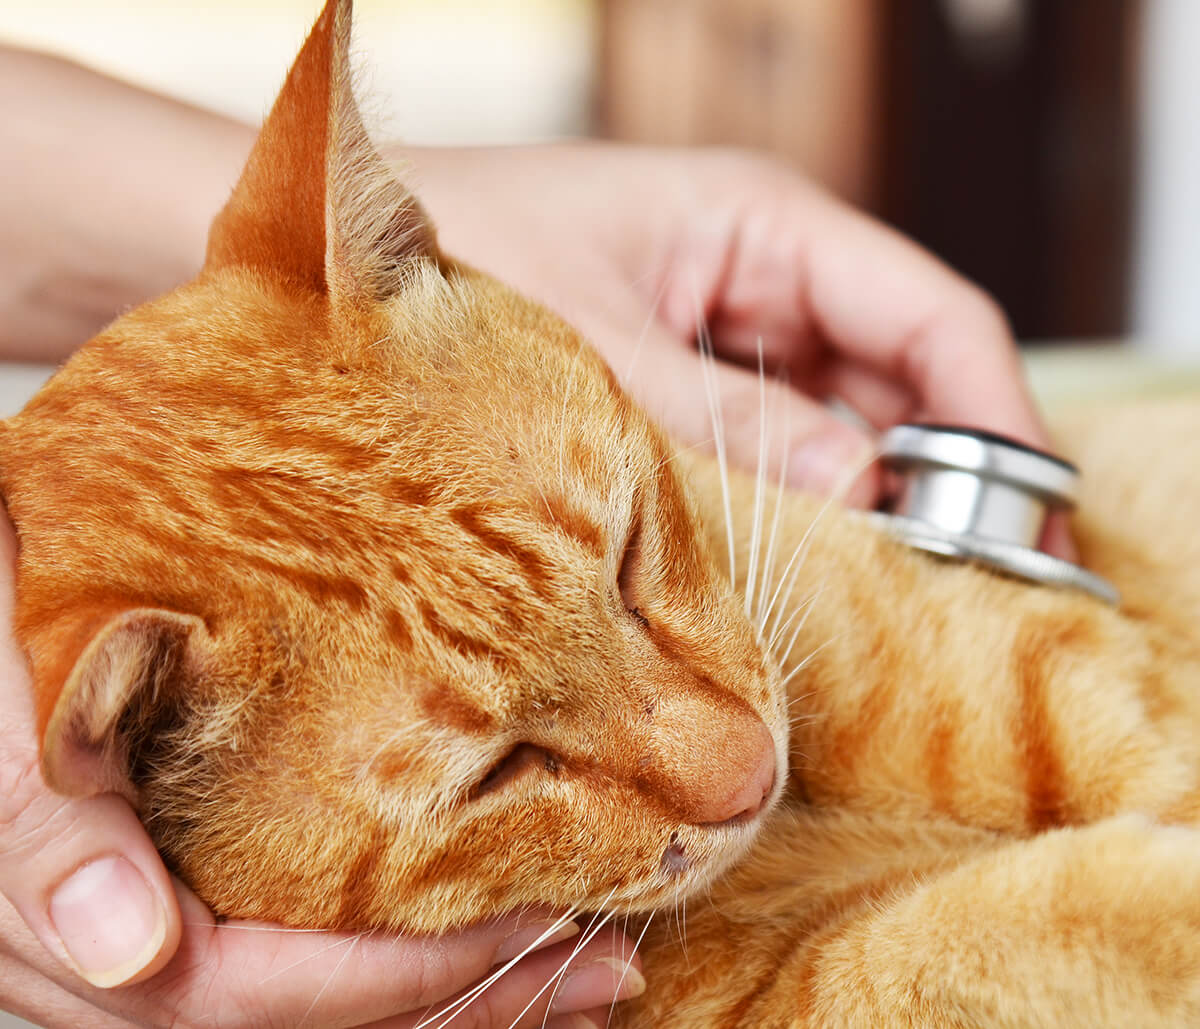 A vet inspecting a cat